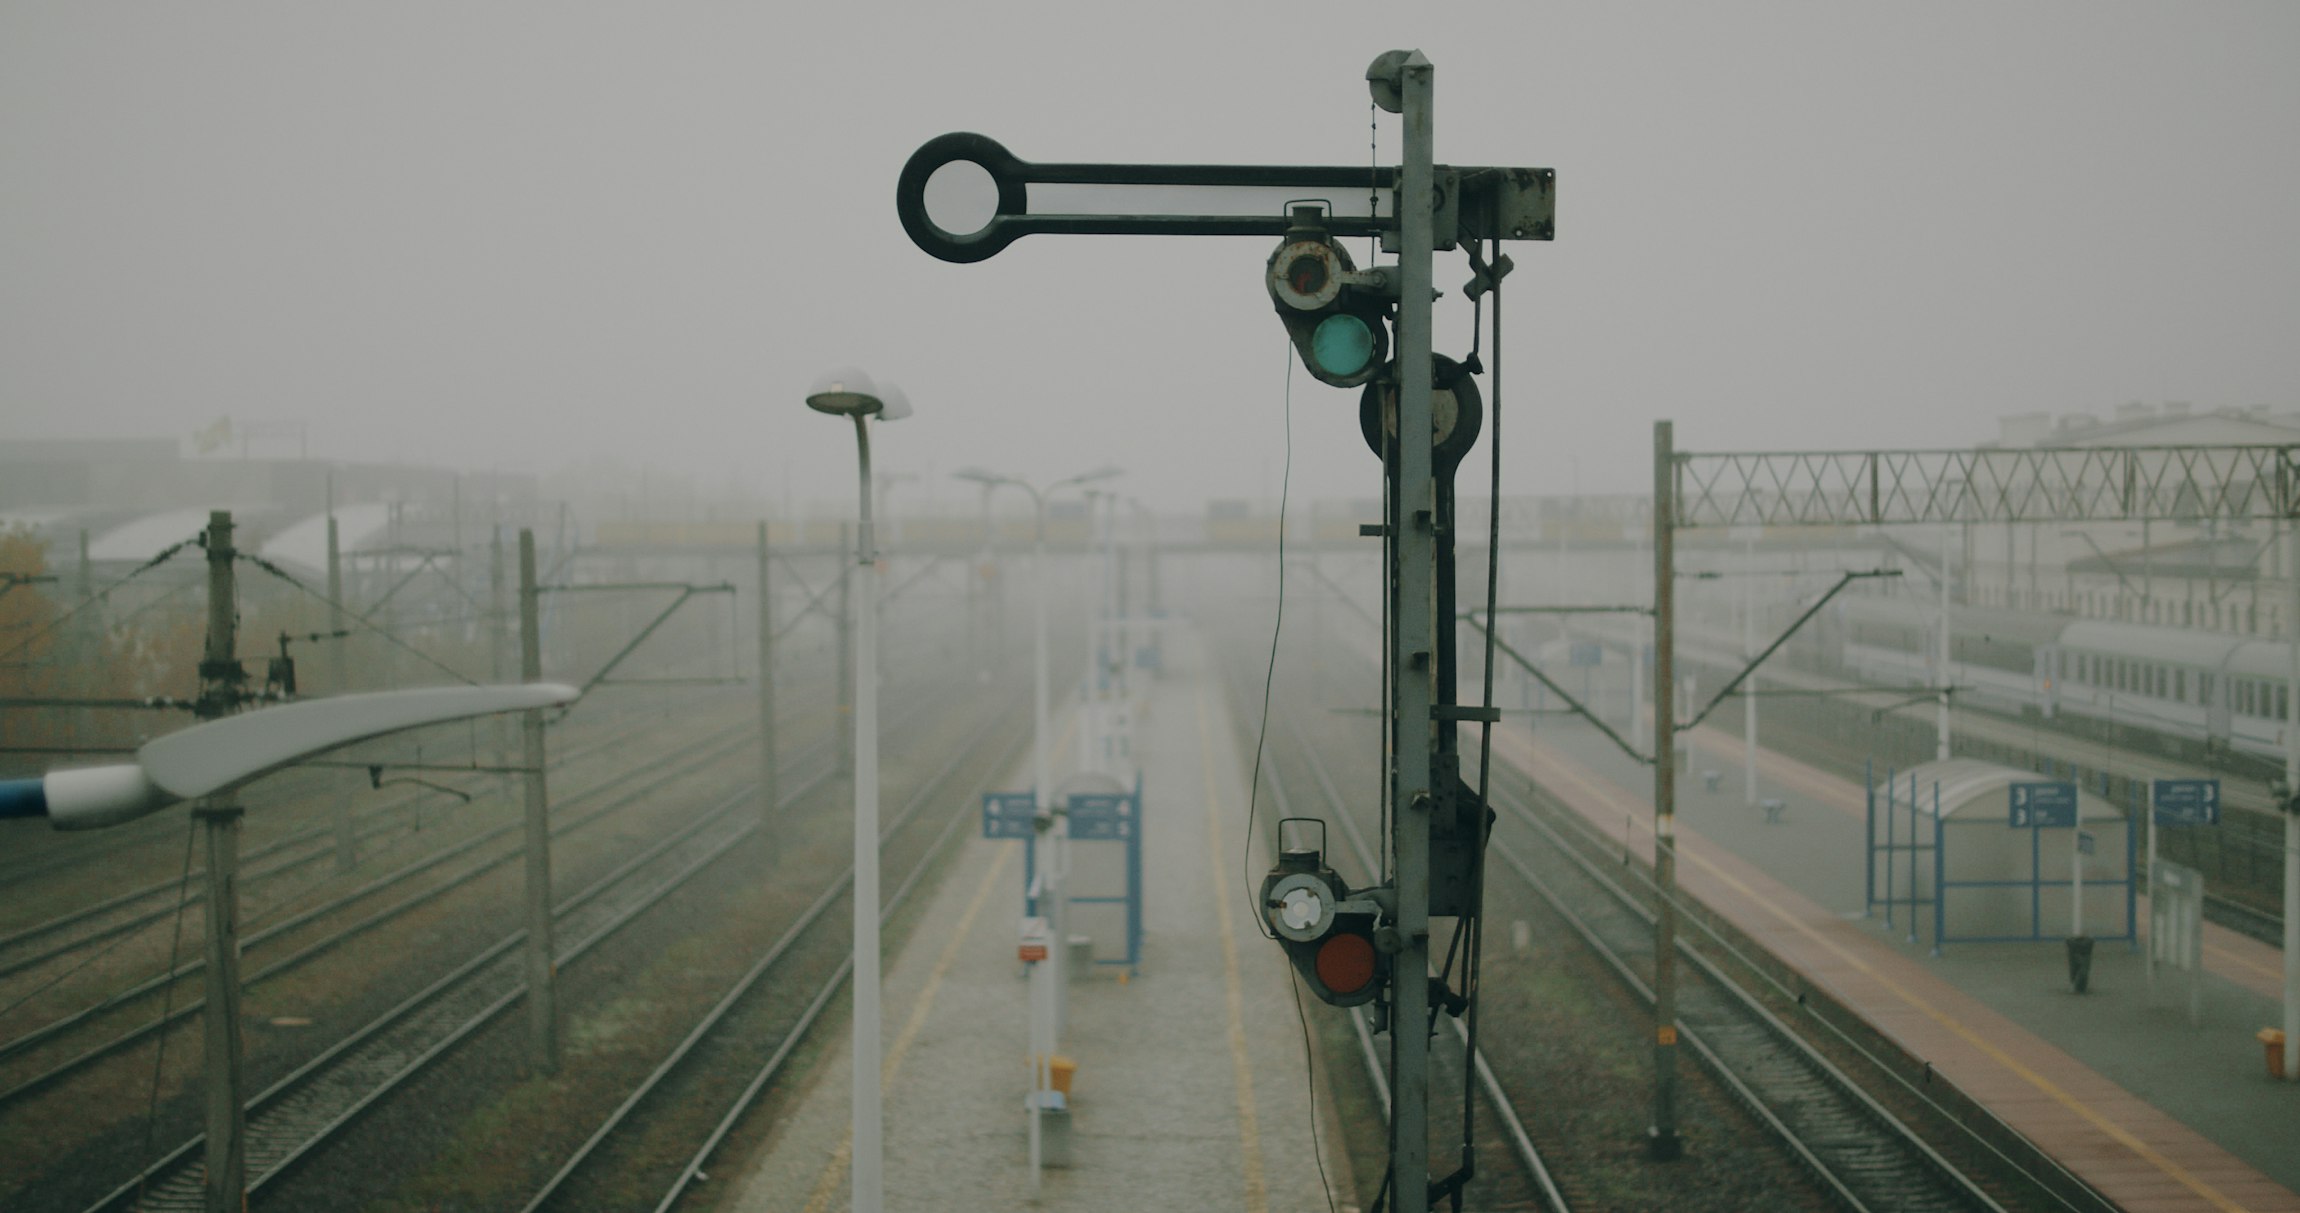 Railroad semafor. Credits: Unsplash - Michał Franczak